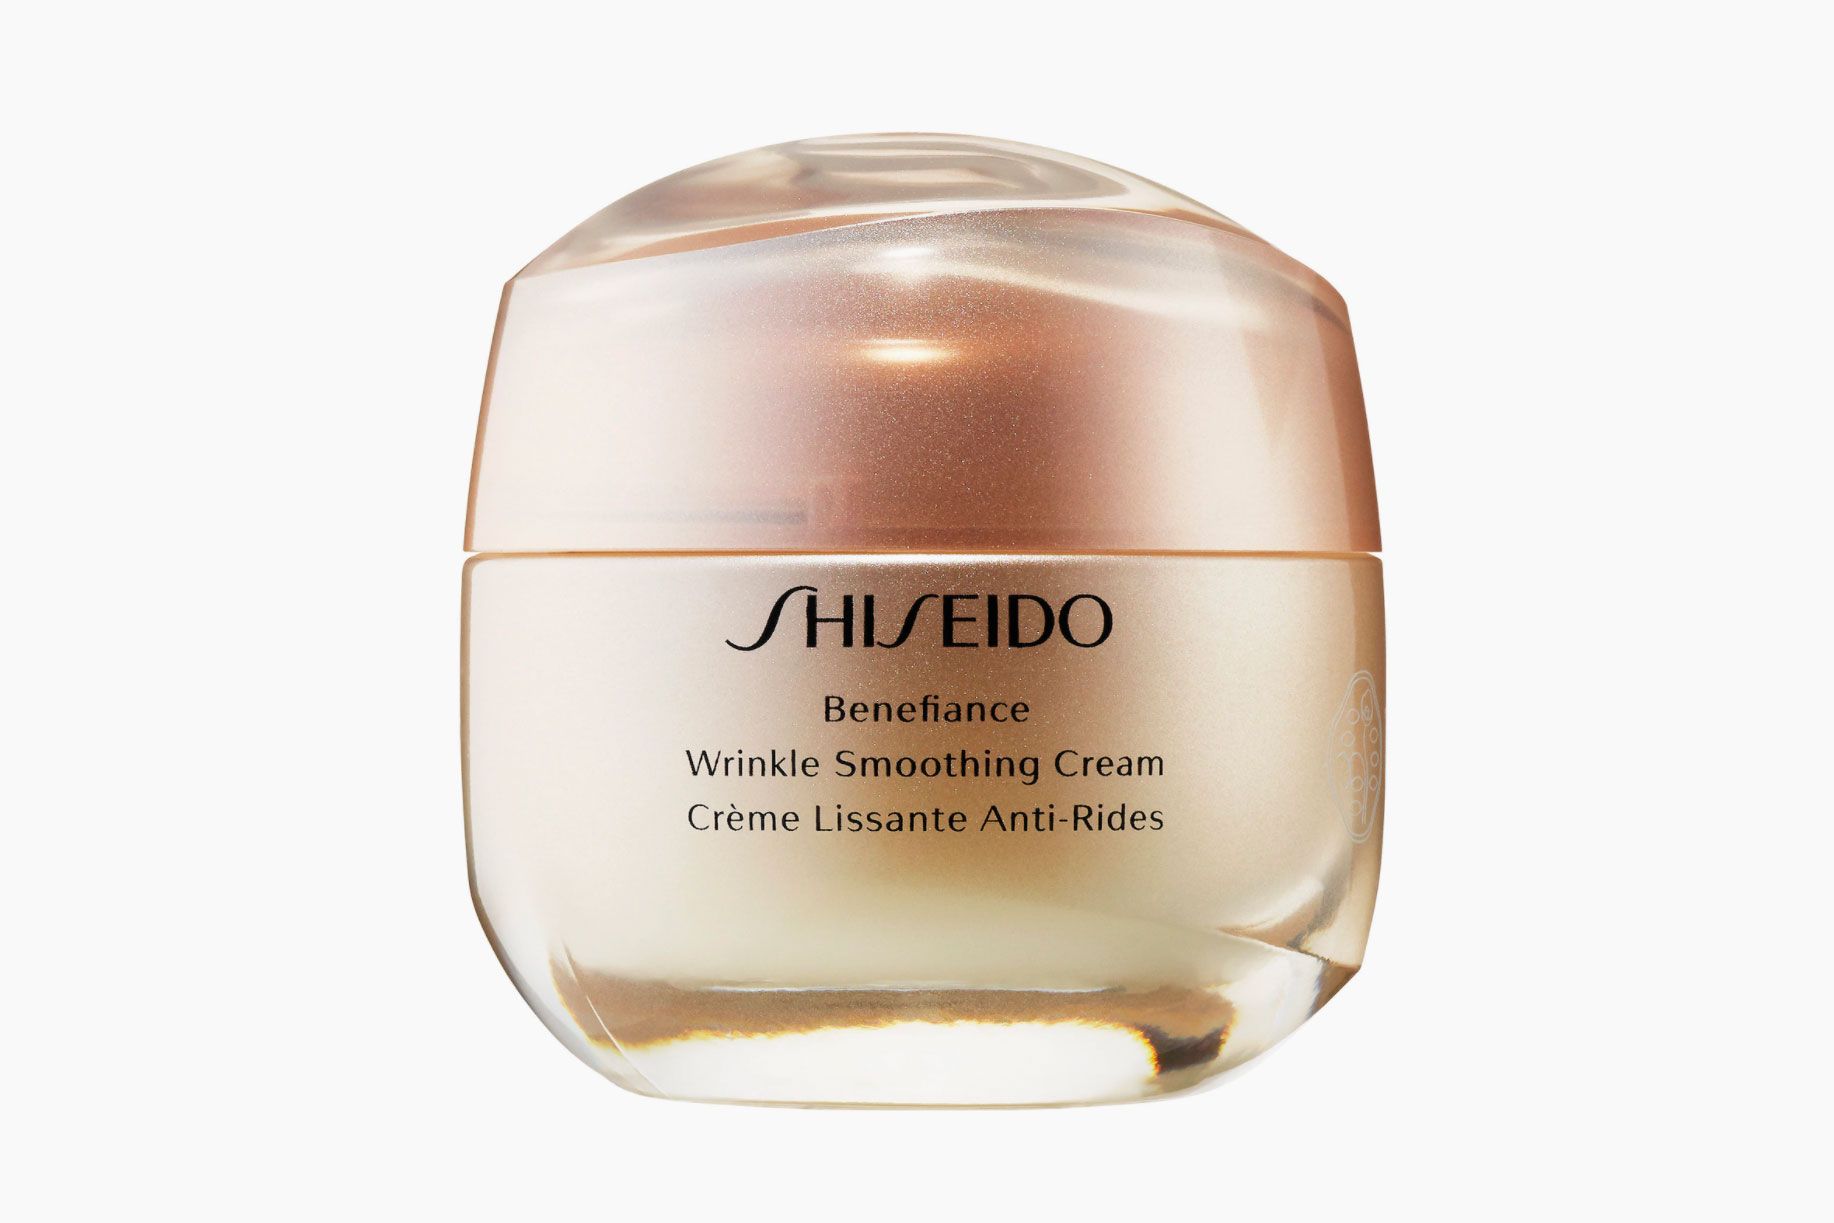 Shiseido benefiance wrinkle. Shiseido Benefiance. Шисейдо Бенефианс набор анти Вринкл. Wrinkle косметика. Shiseido Anti Wrinkle Cream.